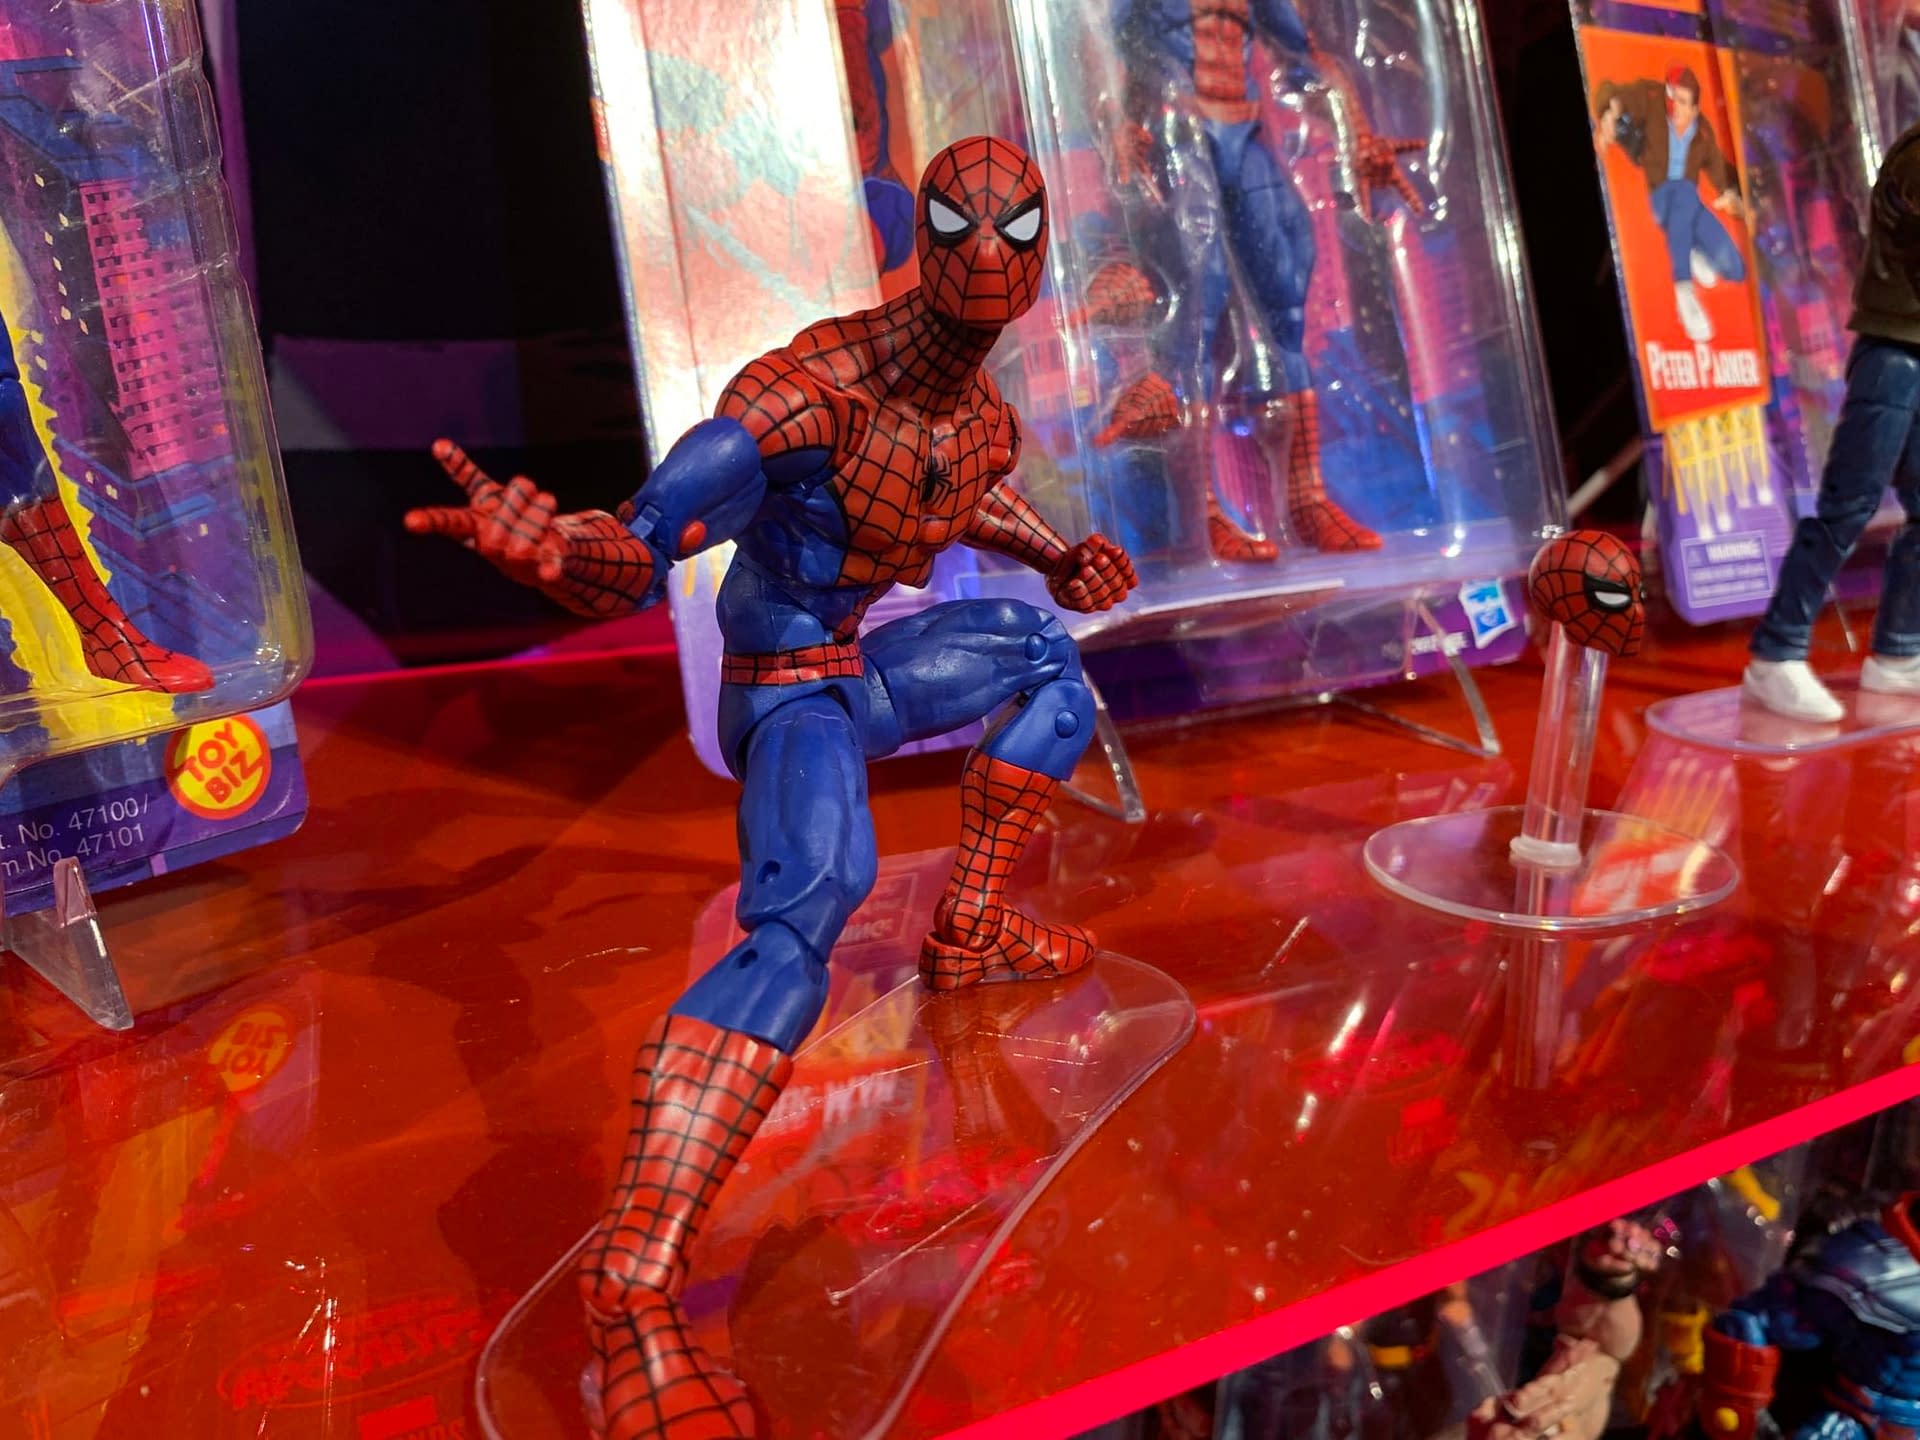 Hasbro New York Toy Fair 2020 - Marvel Legends Figures